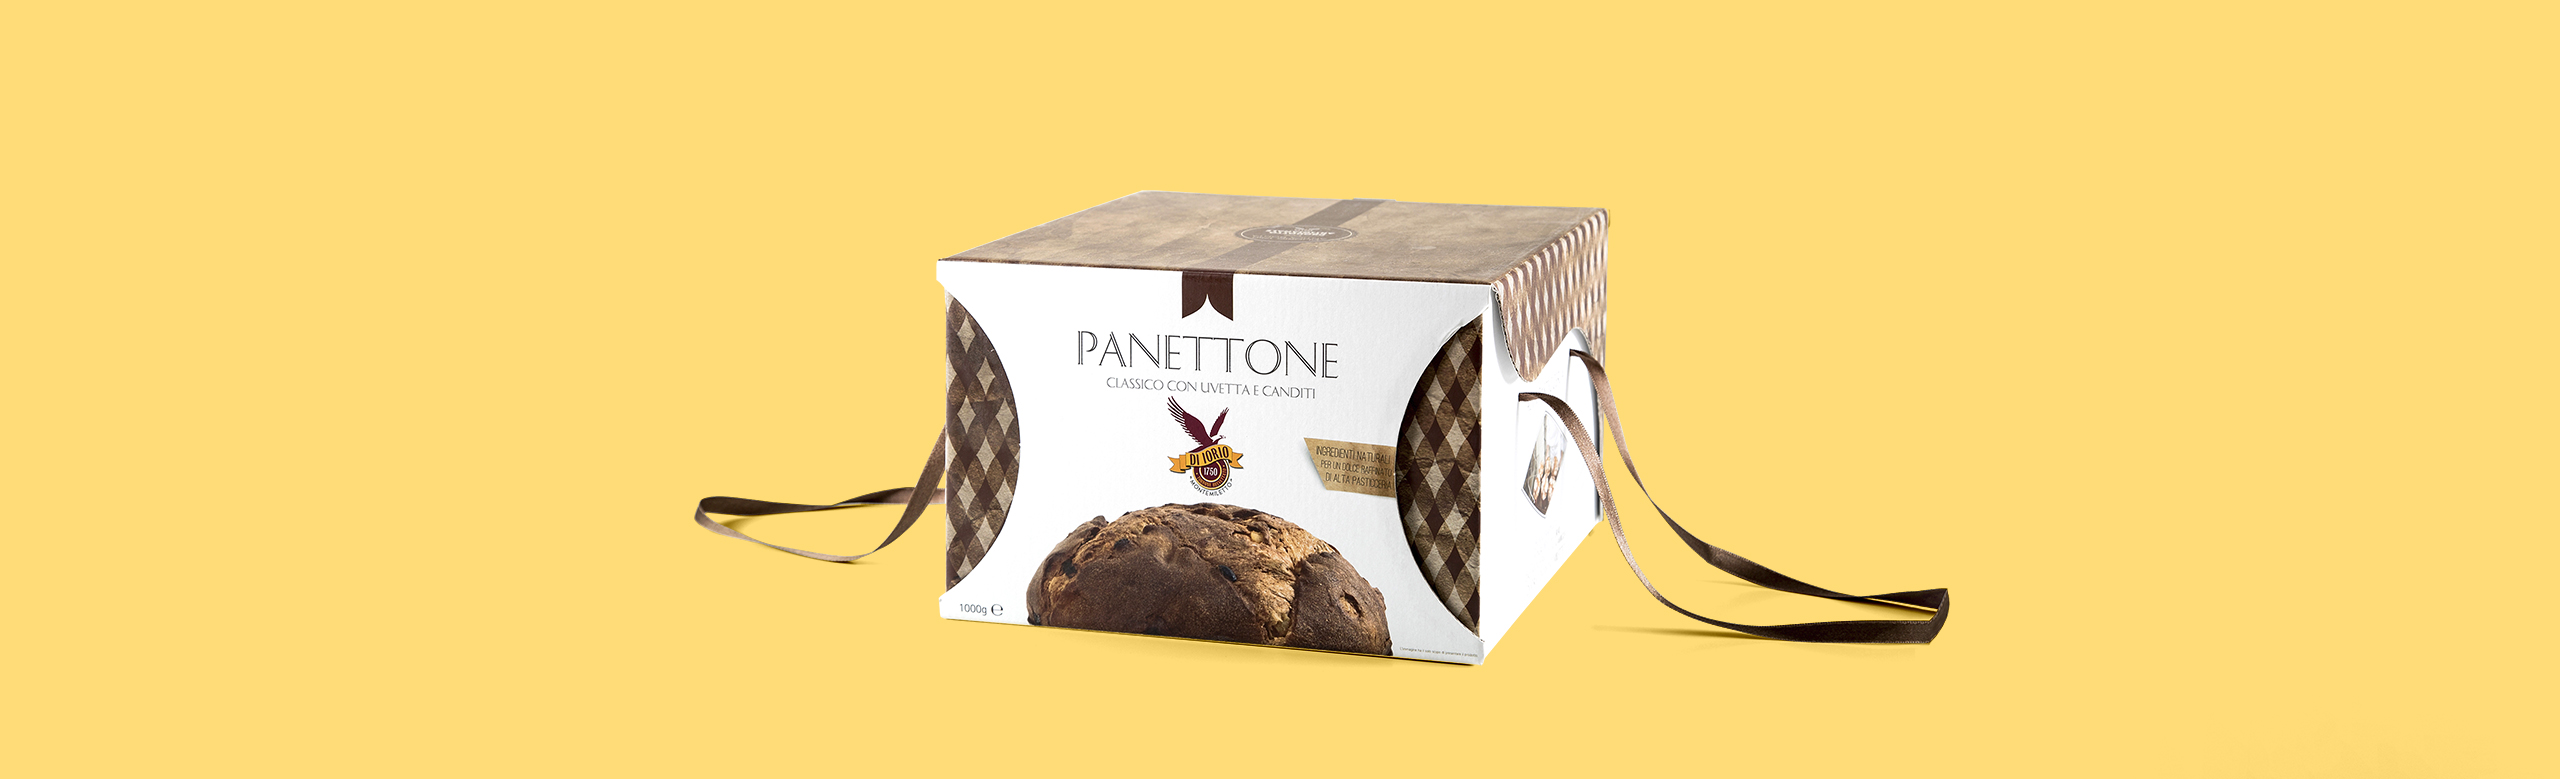 panettone box